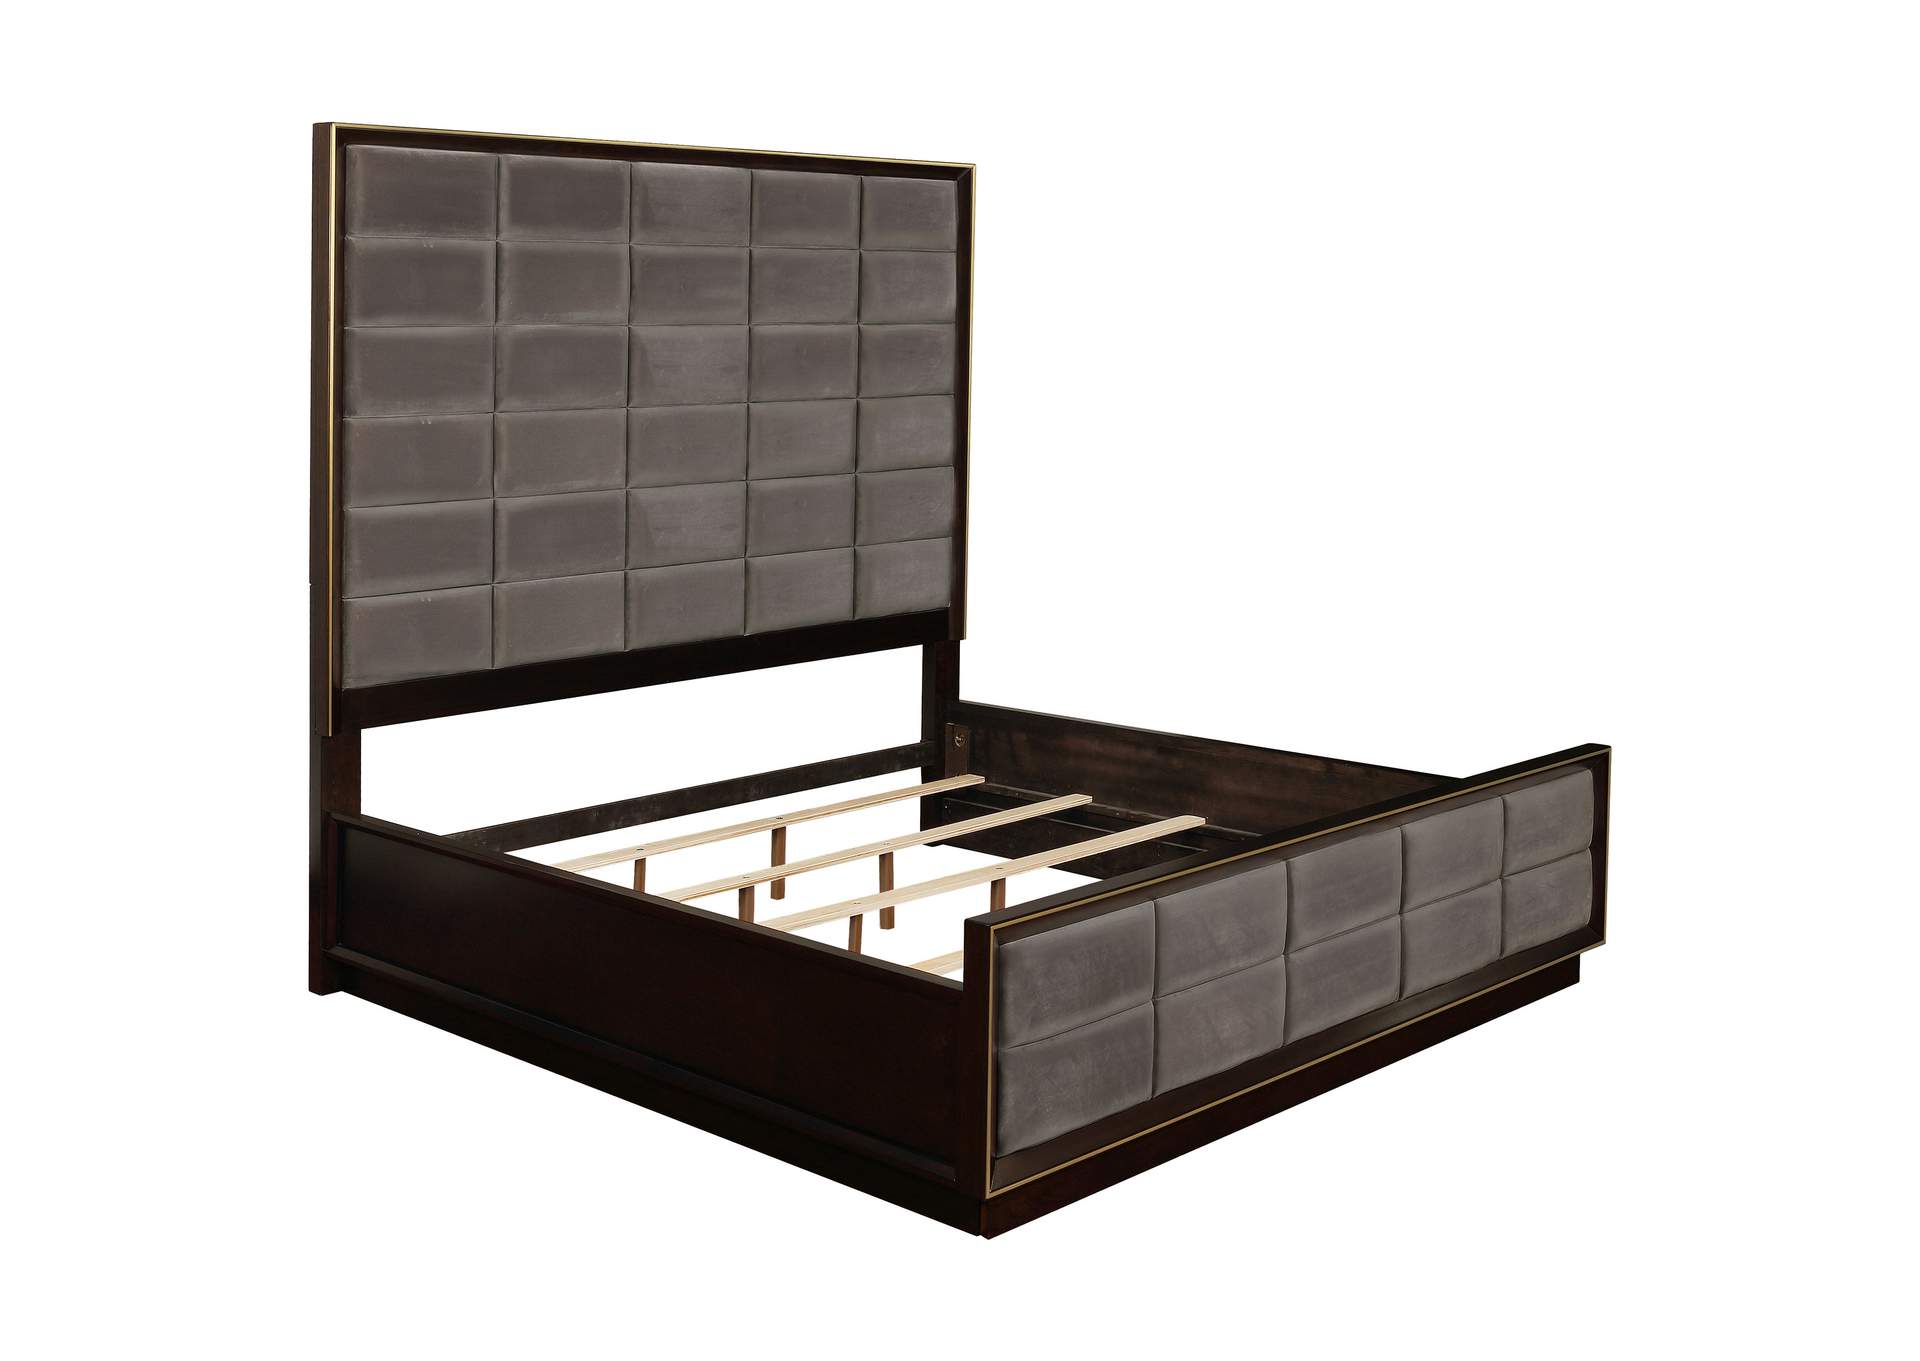 Durango 4-piece Eastern King Panel Bedroom Set Grey and Smoked Peppercorn,Coaster Furniture